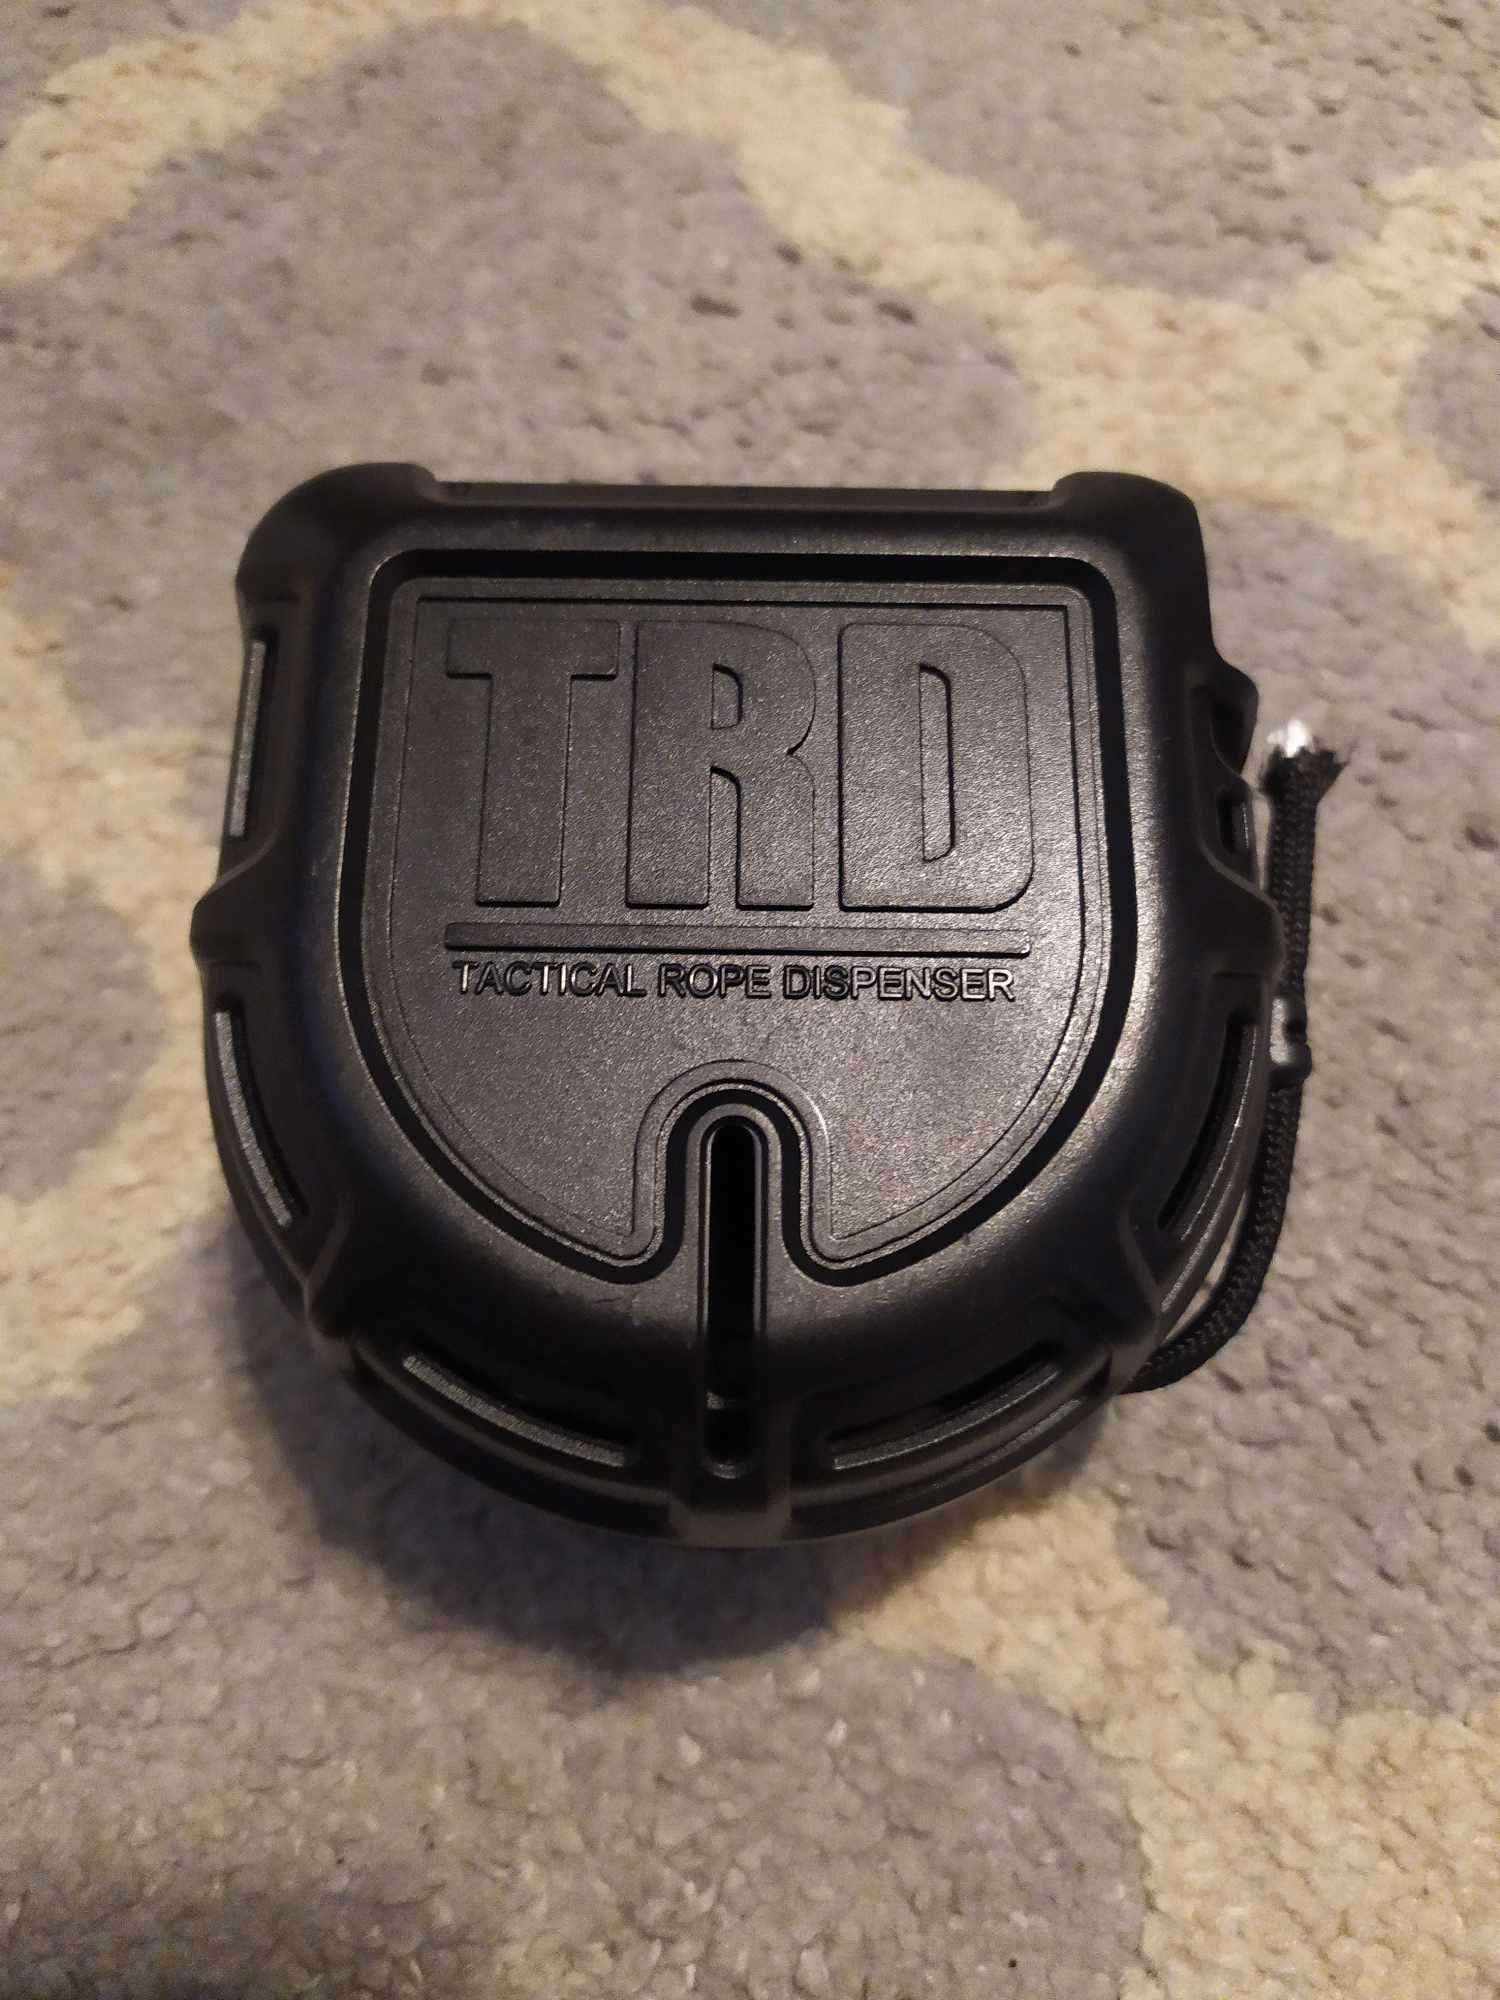 TRD - Caixa de Paracord